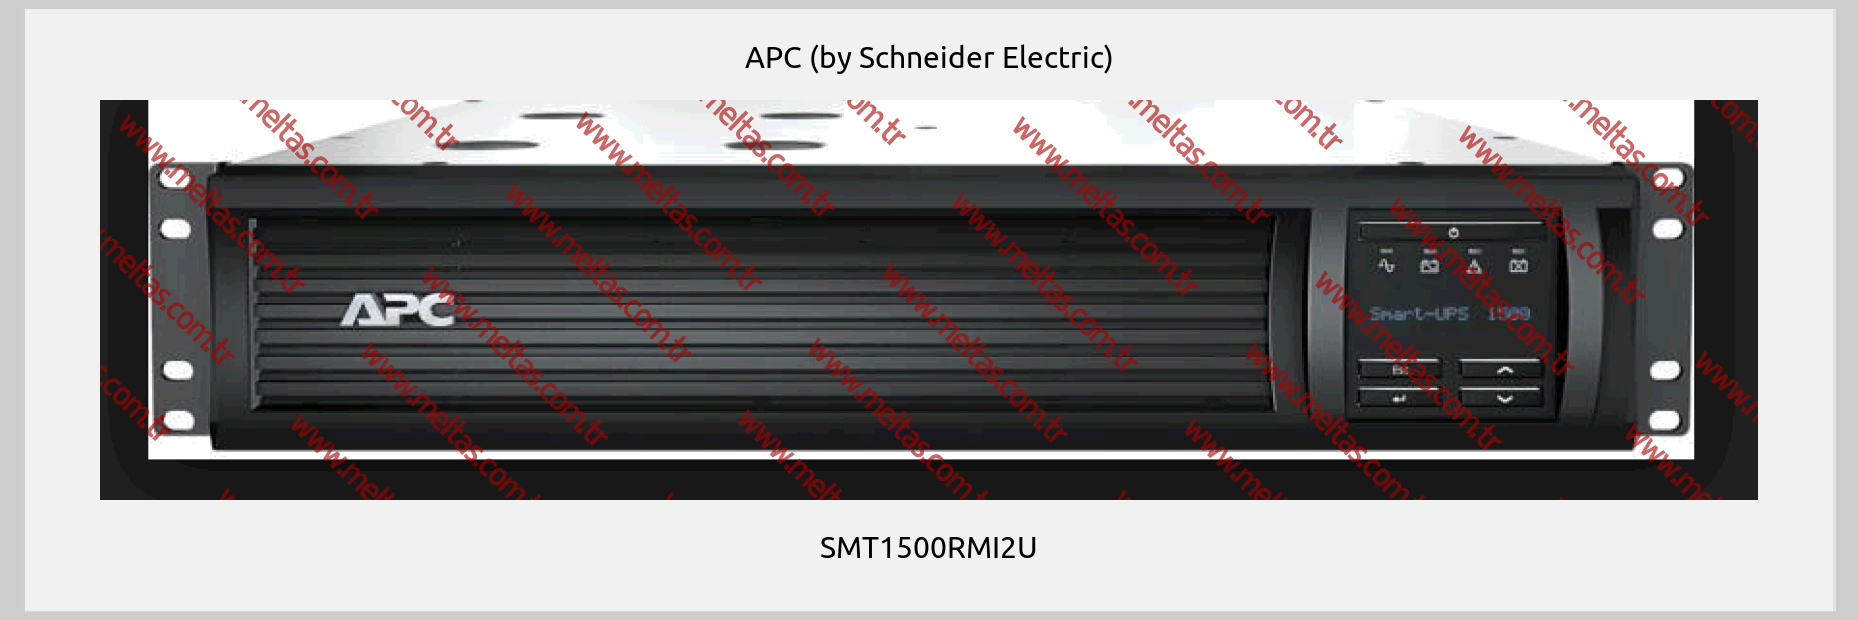 APC (by Schneider Electric) - SMT1500RMI2U